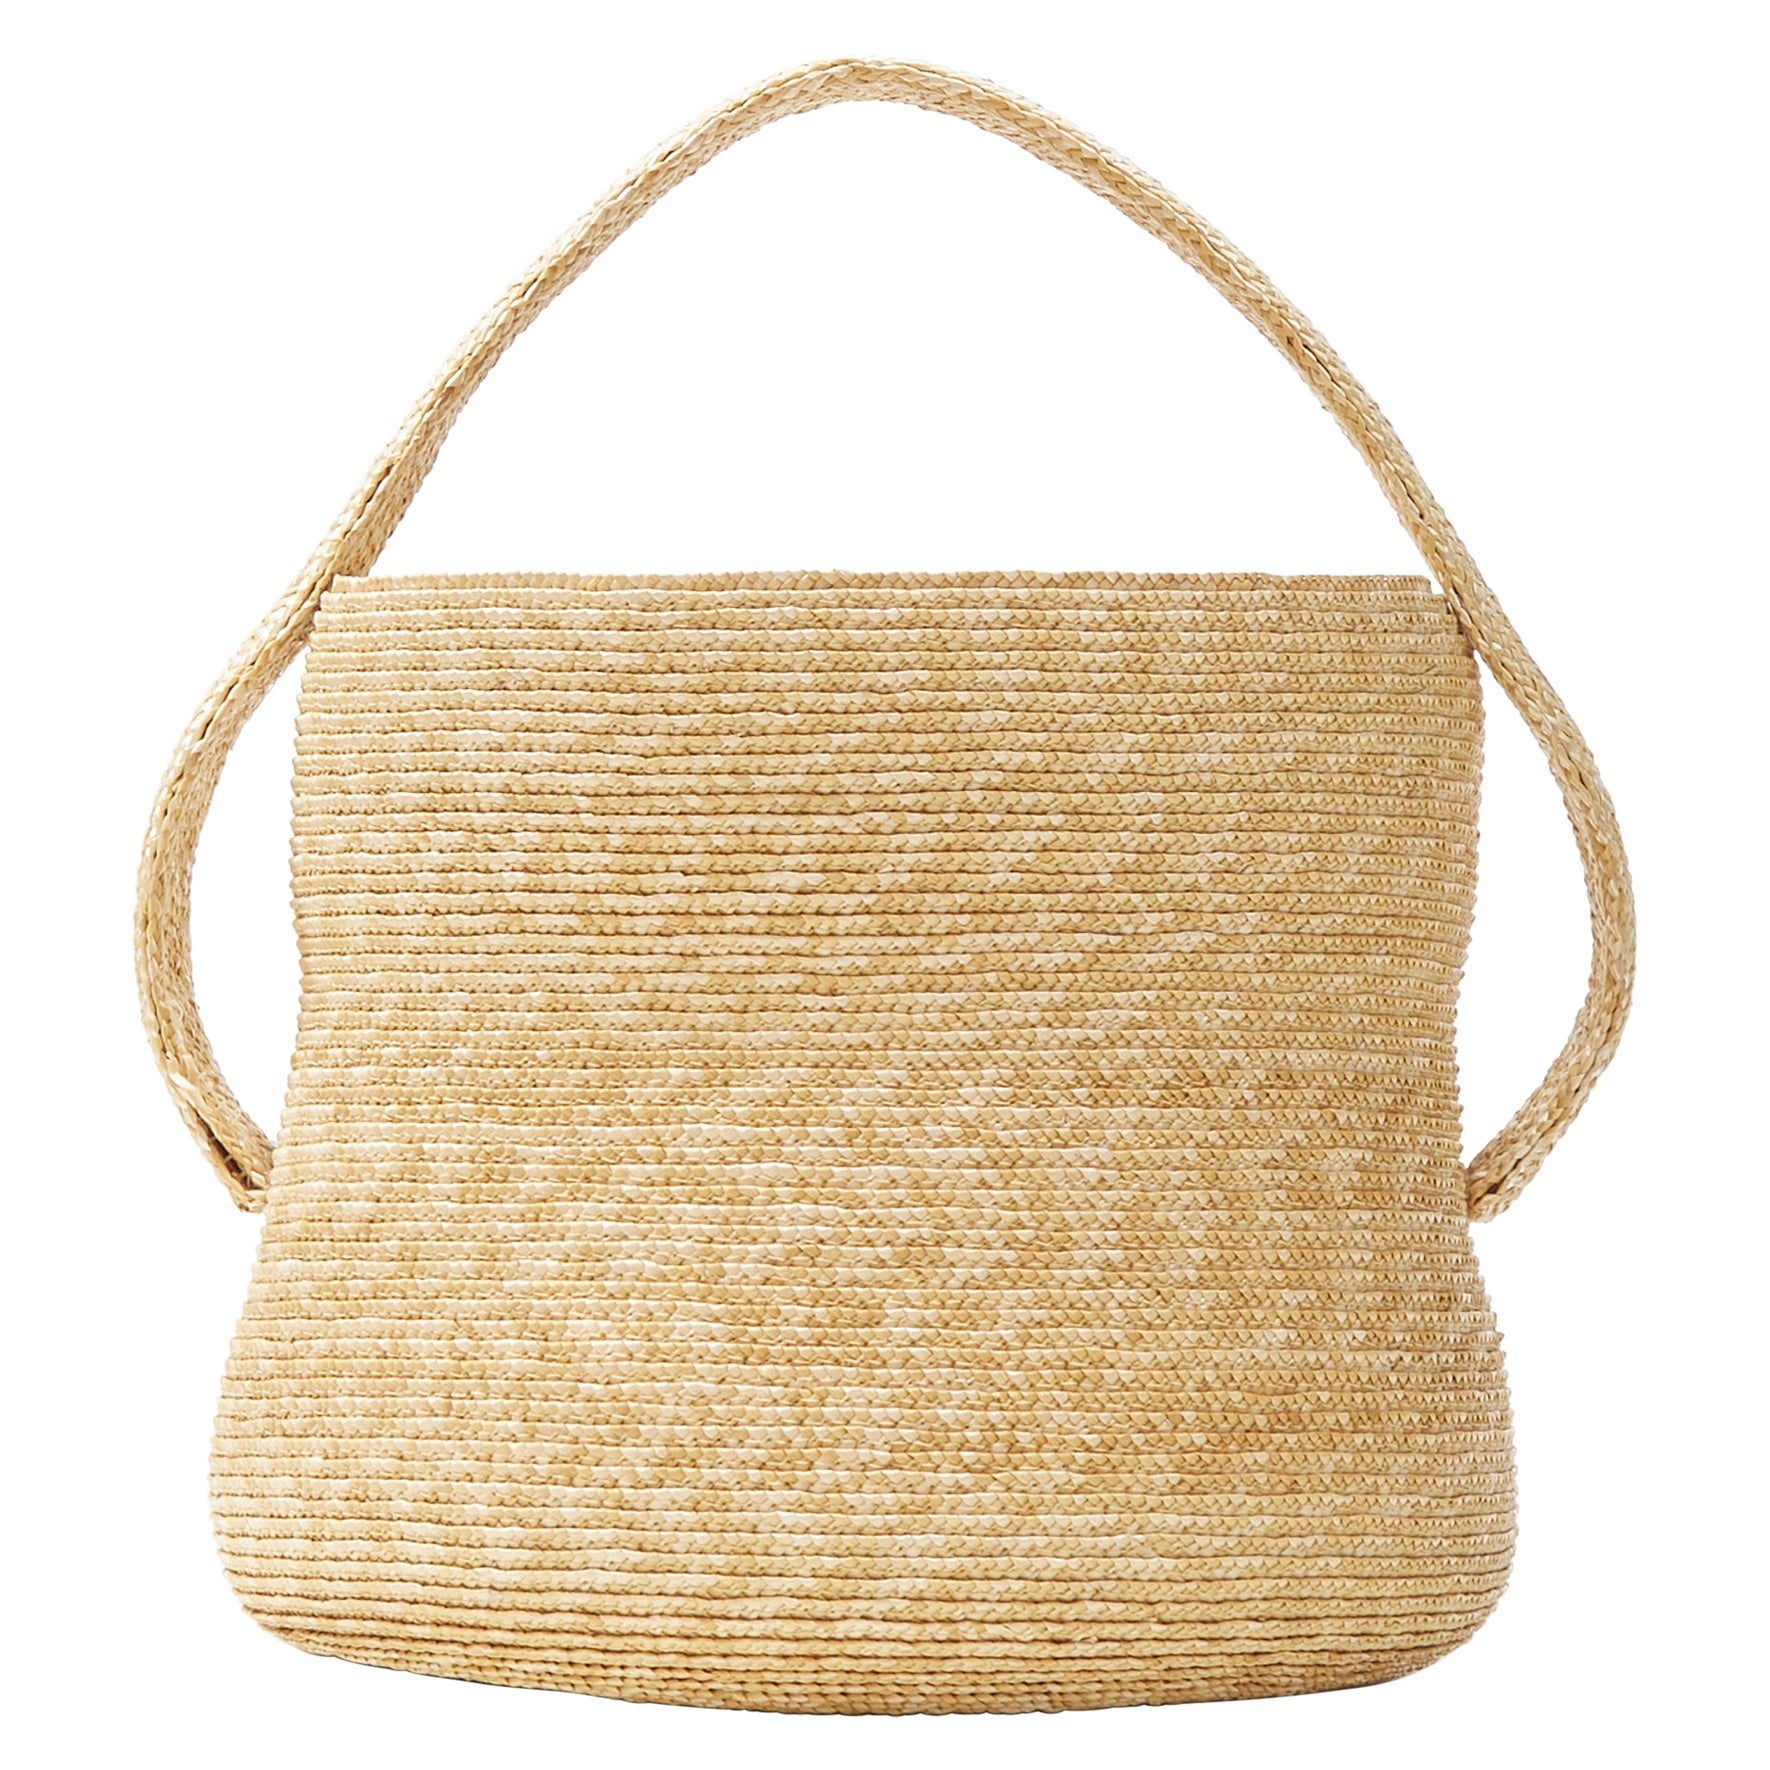 new ROSIE ASSOULIN North South Jug tan raffia straw woven small basket bag